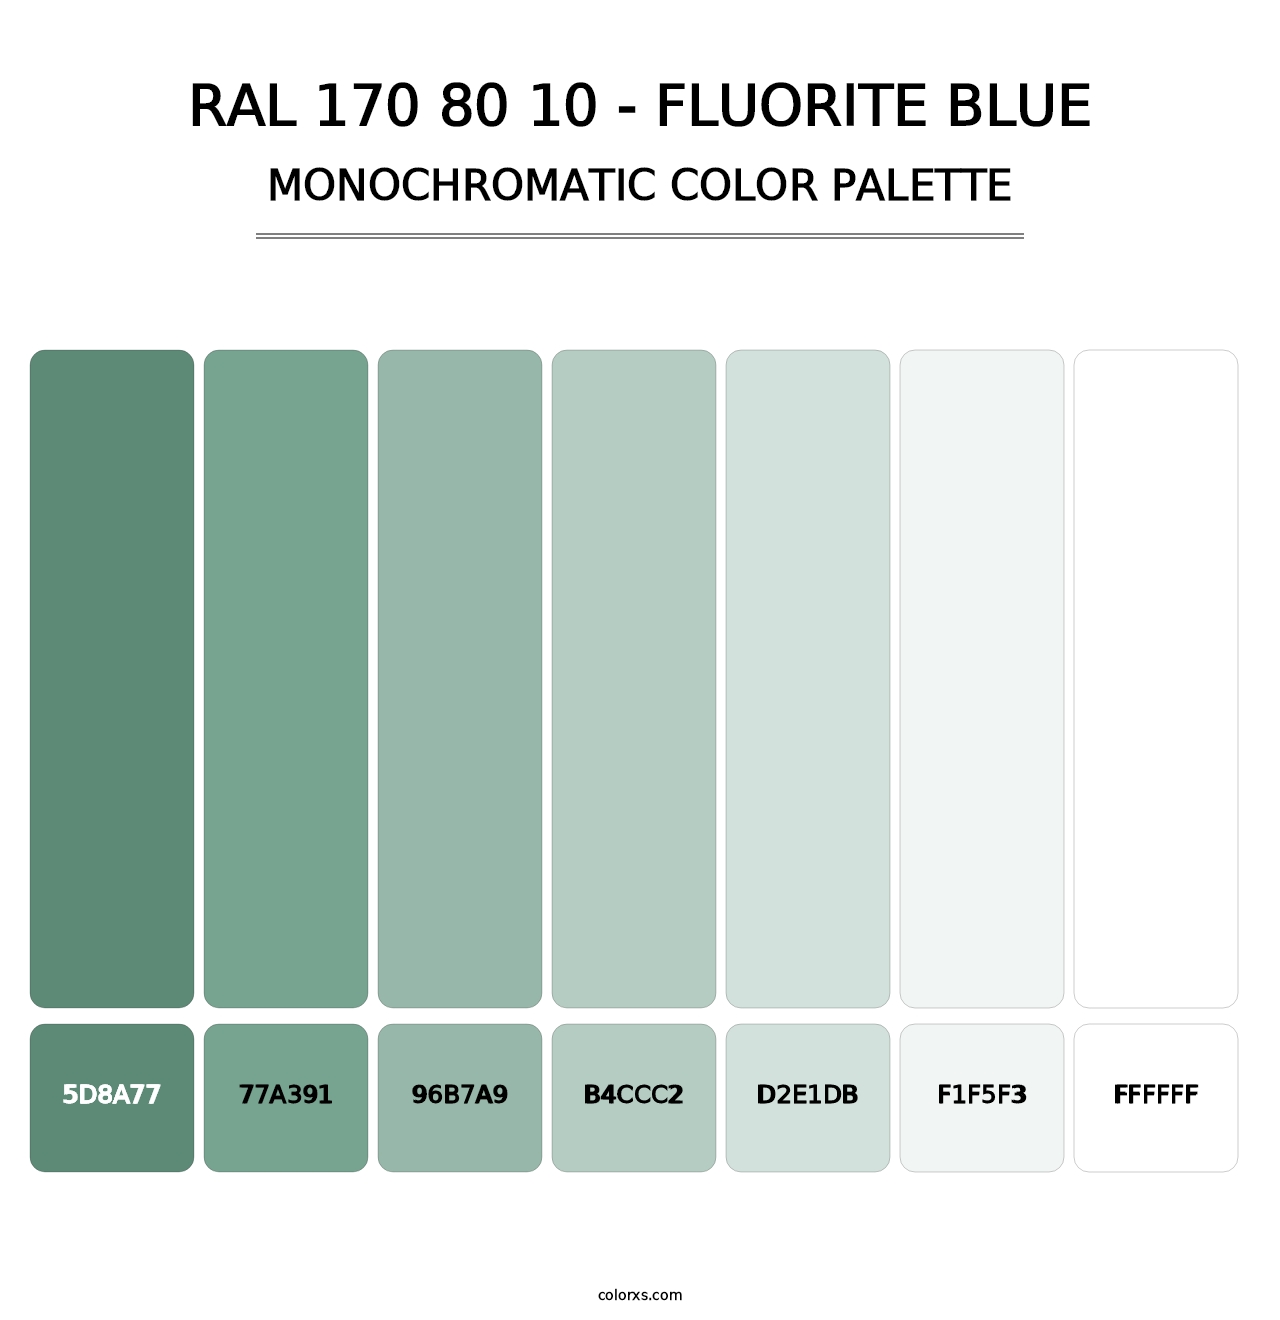 RAL 170 80 10 - Fluorite Blue - Monochromatic Color Palette